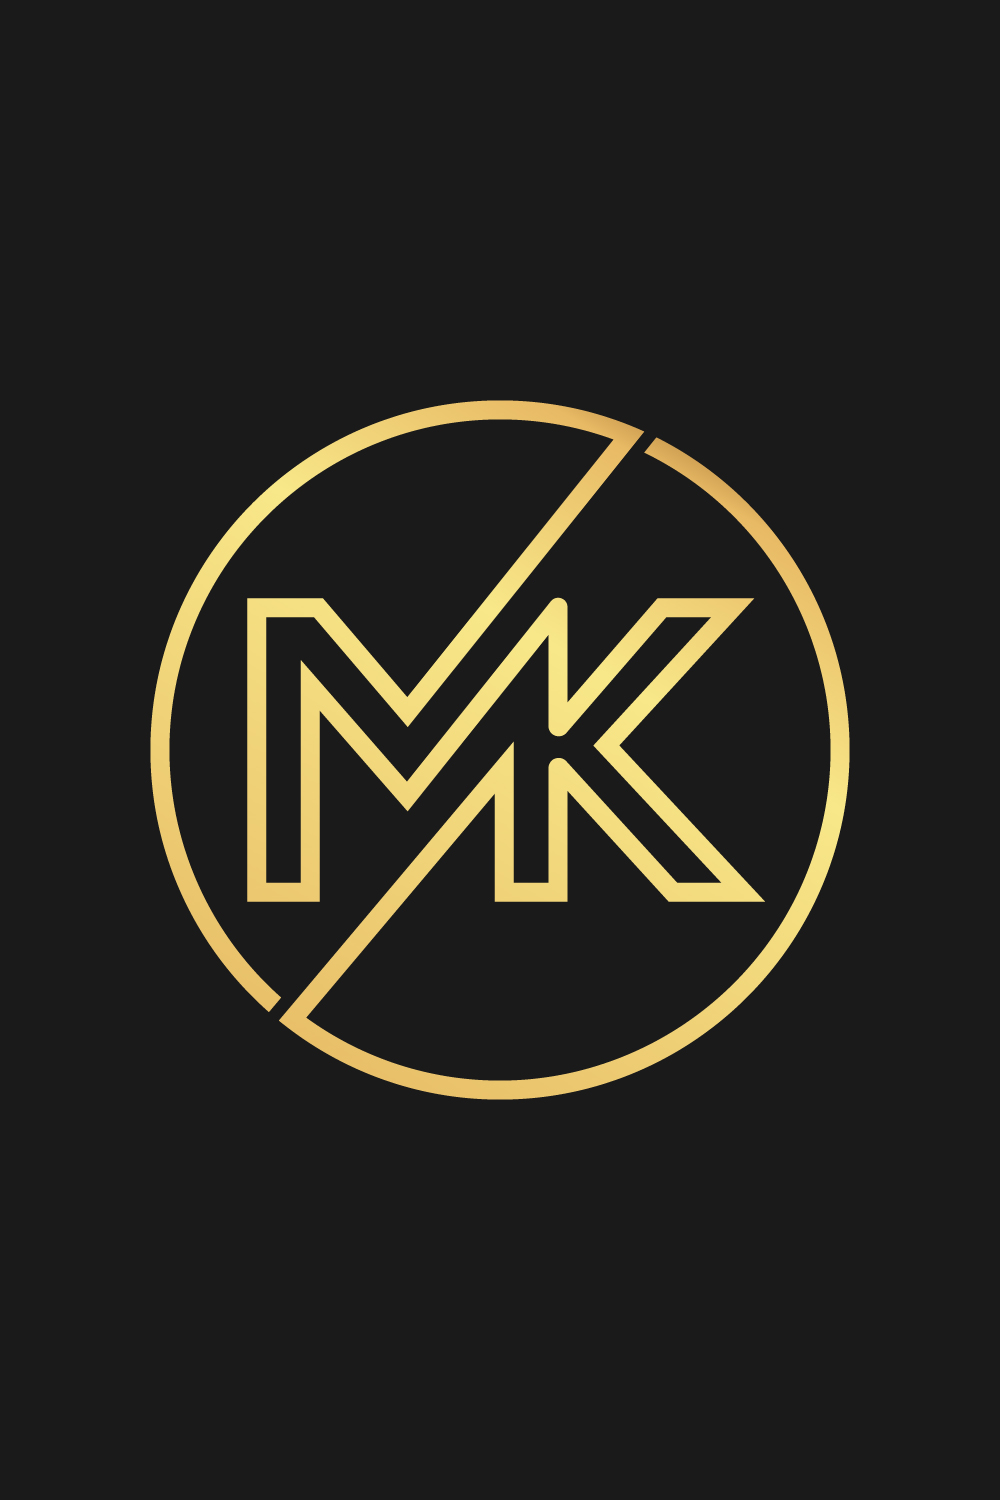 MK logo design pinterest preview image.